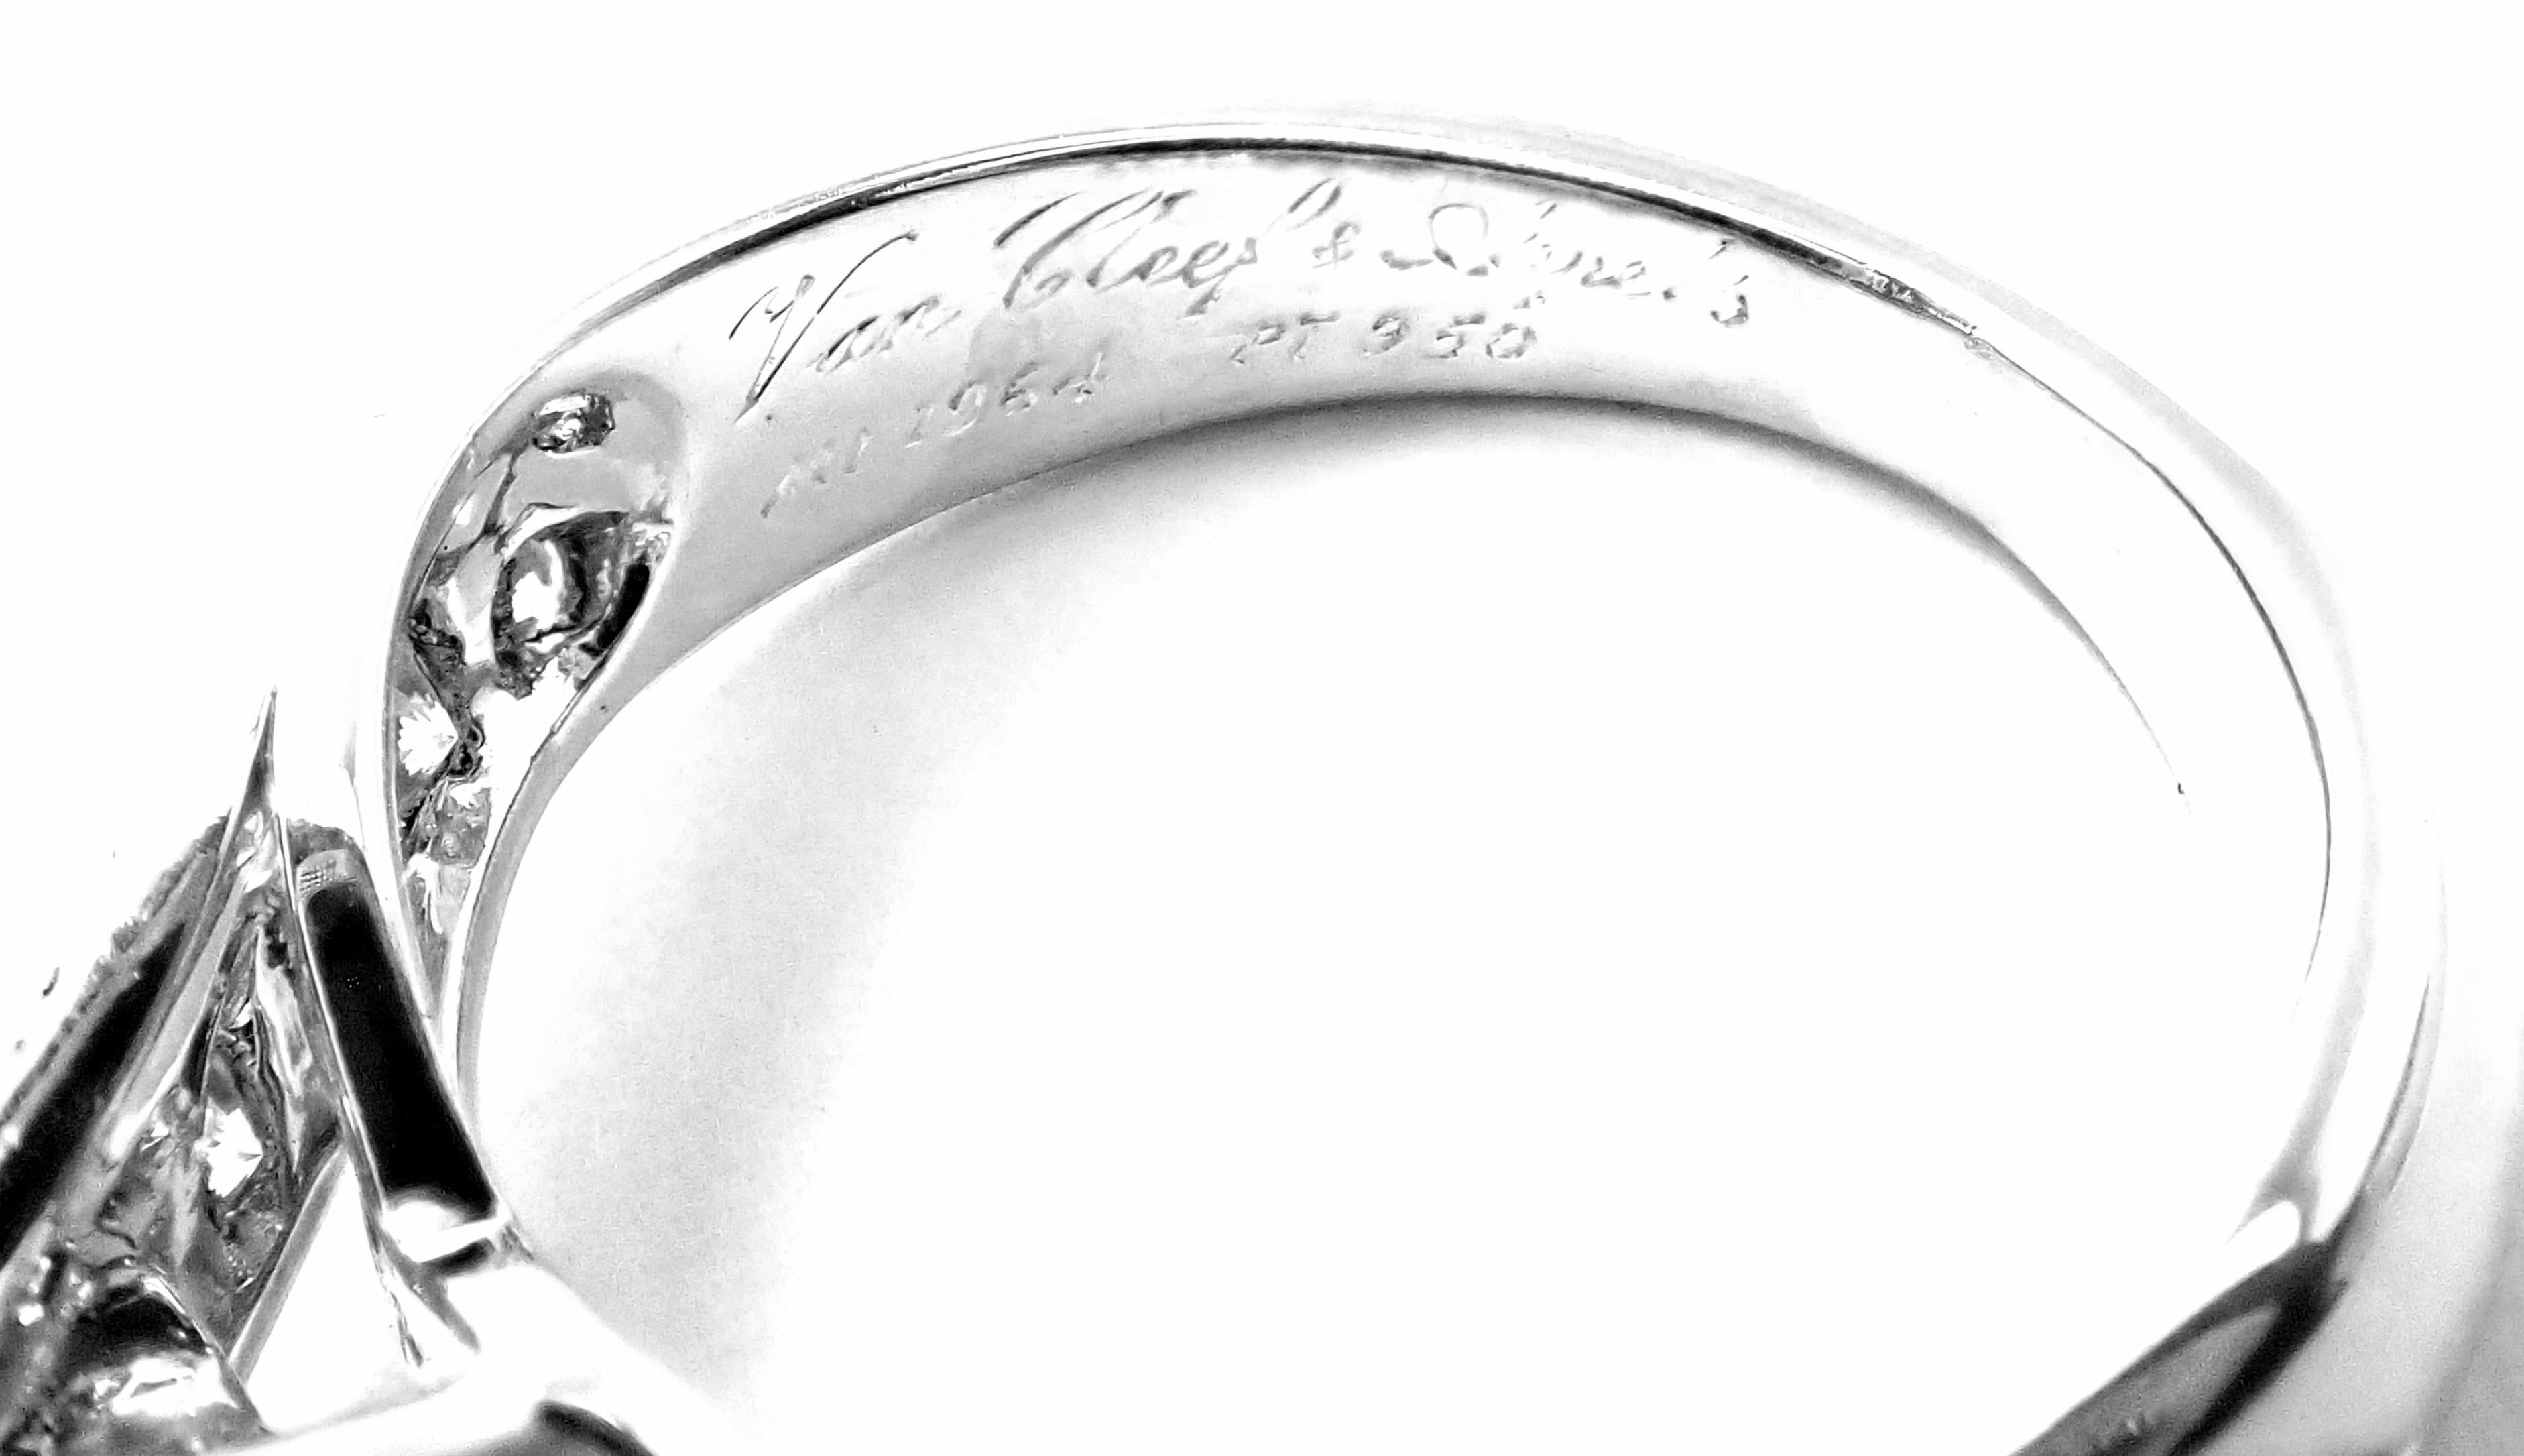 Brilliant Cut Authentic Van Cleef & Arpels Platinum 1.88 Carat VVS1 E Diamond Ring GIA For Sale